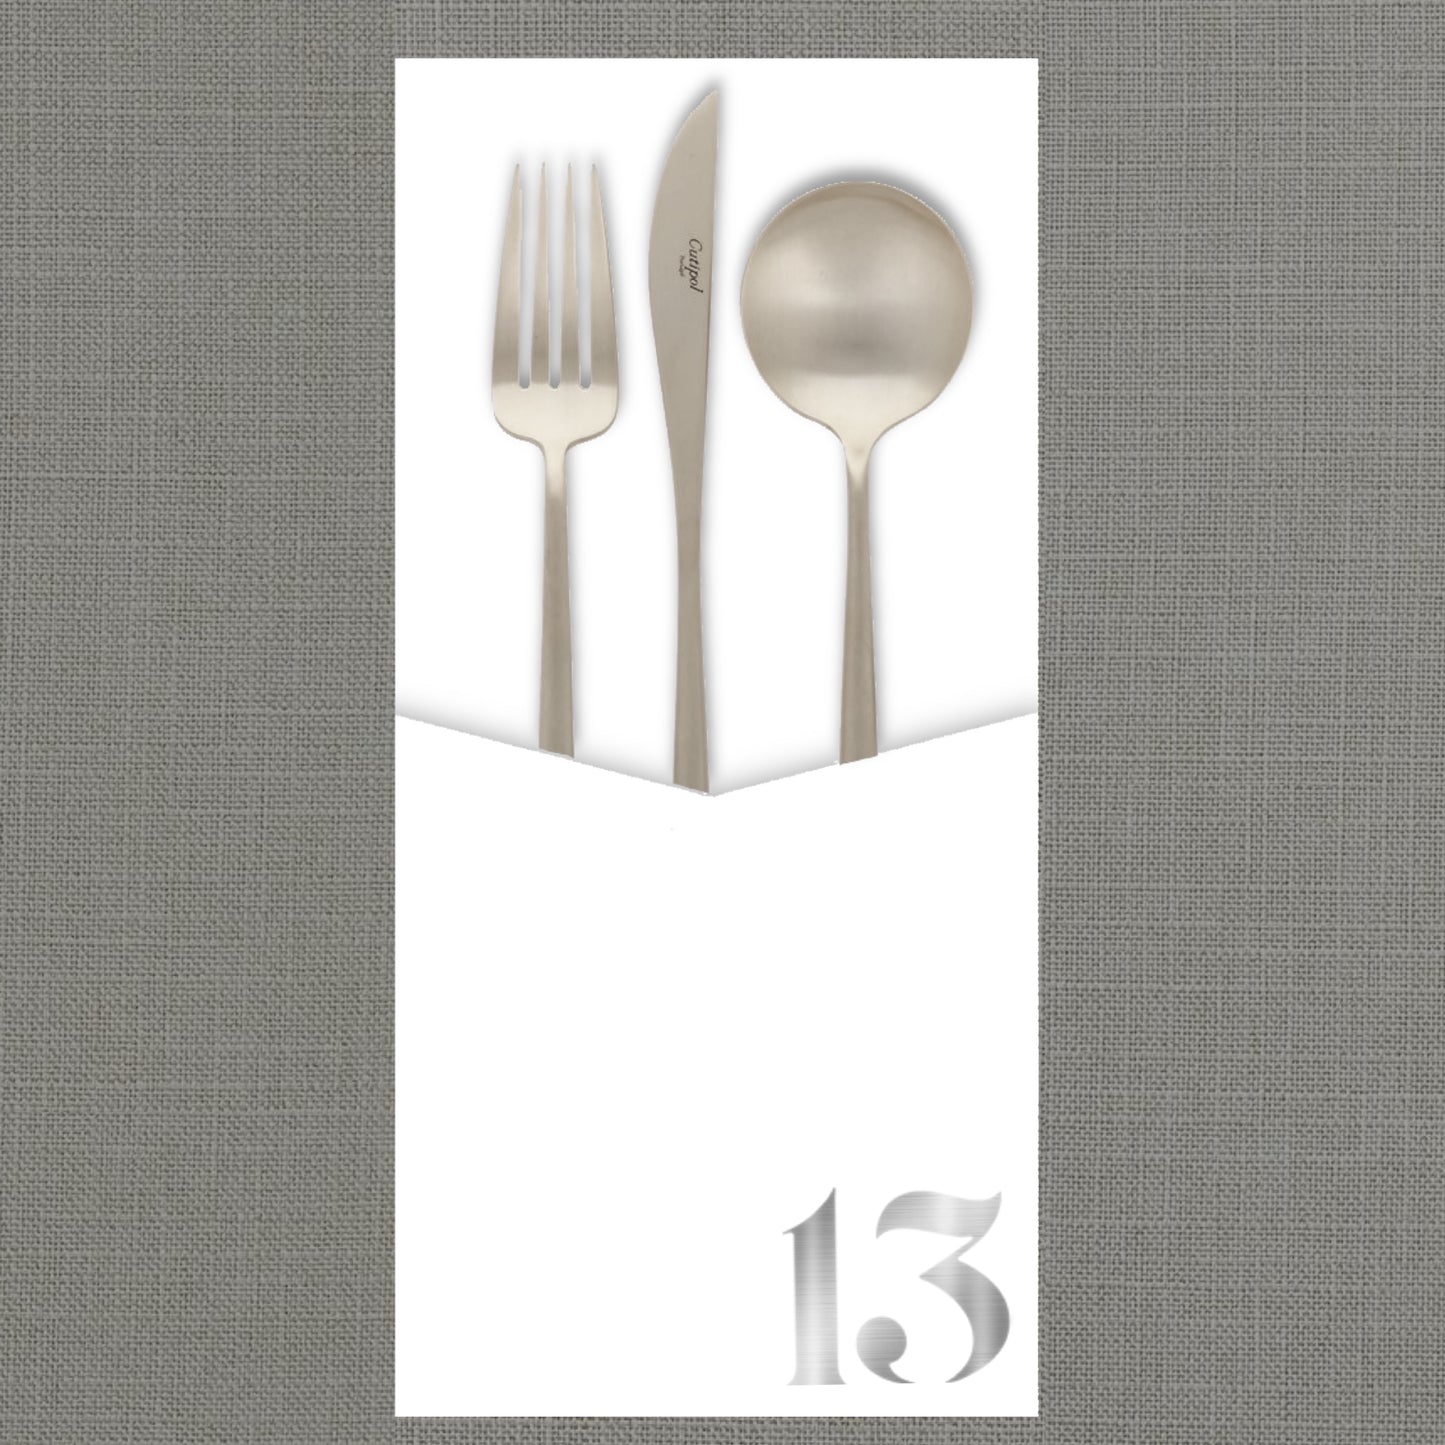 Foil Celebrate! 13 - Cutlery Pouch